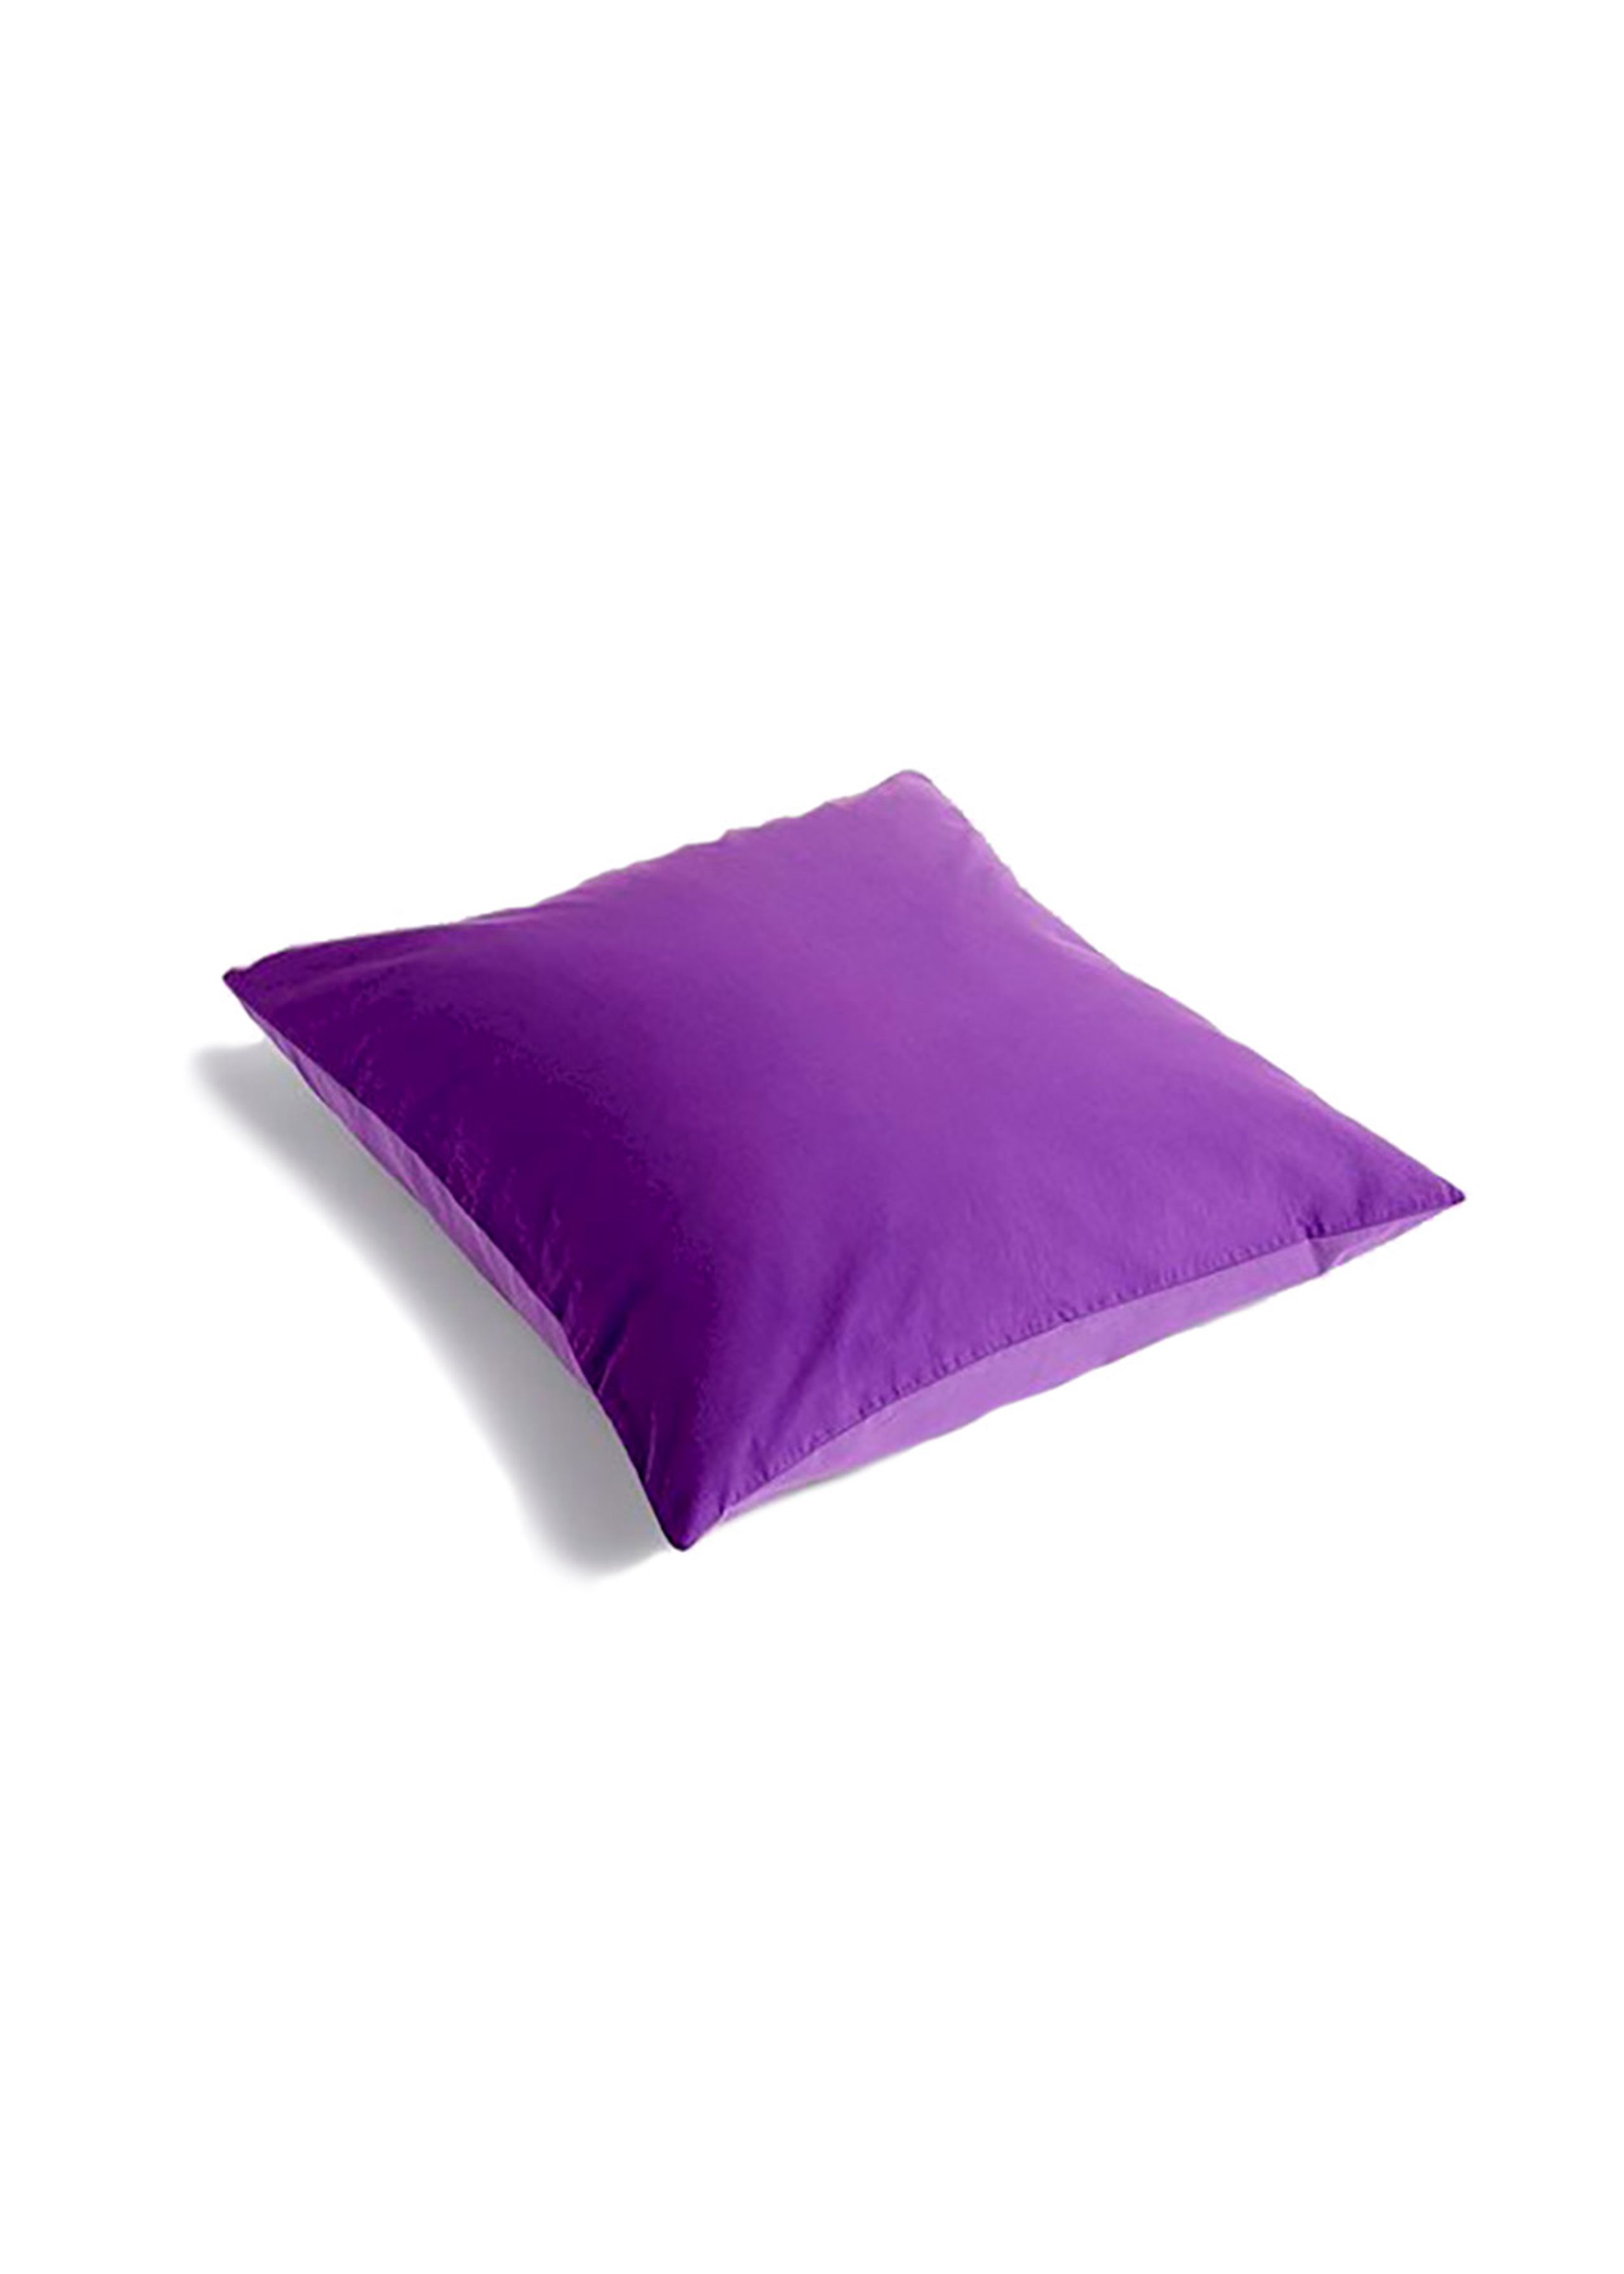 HAY - Bed Sheet - Duo Pillow Case - Vivid Purple